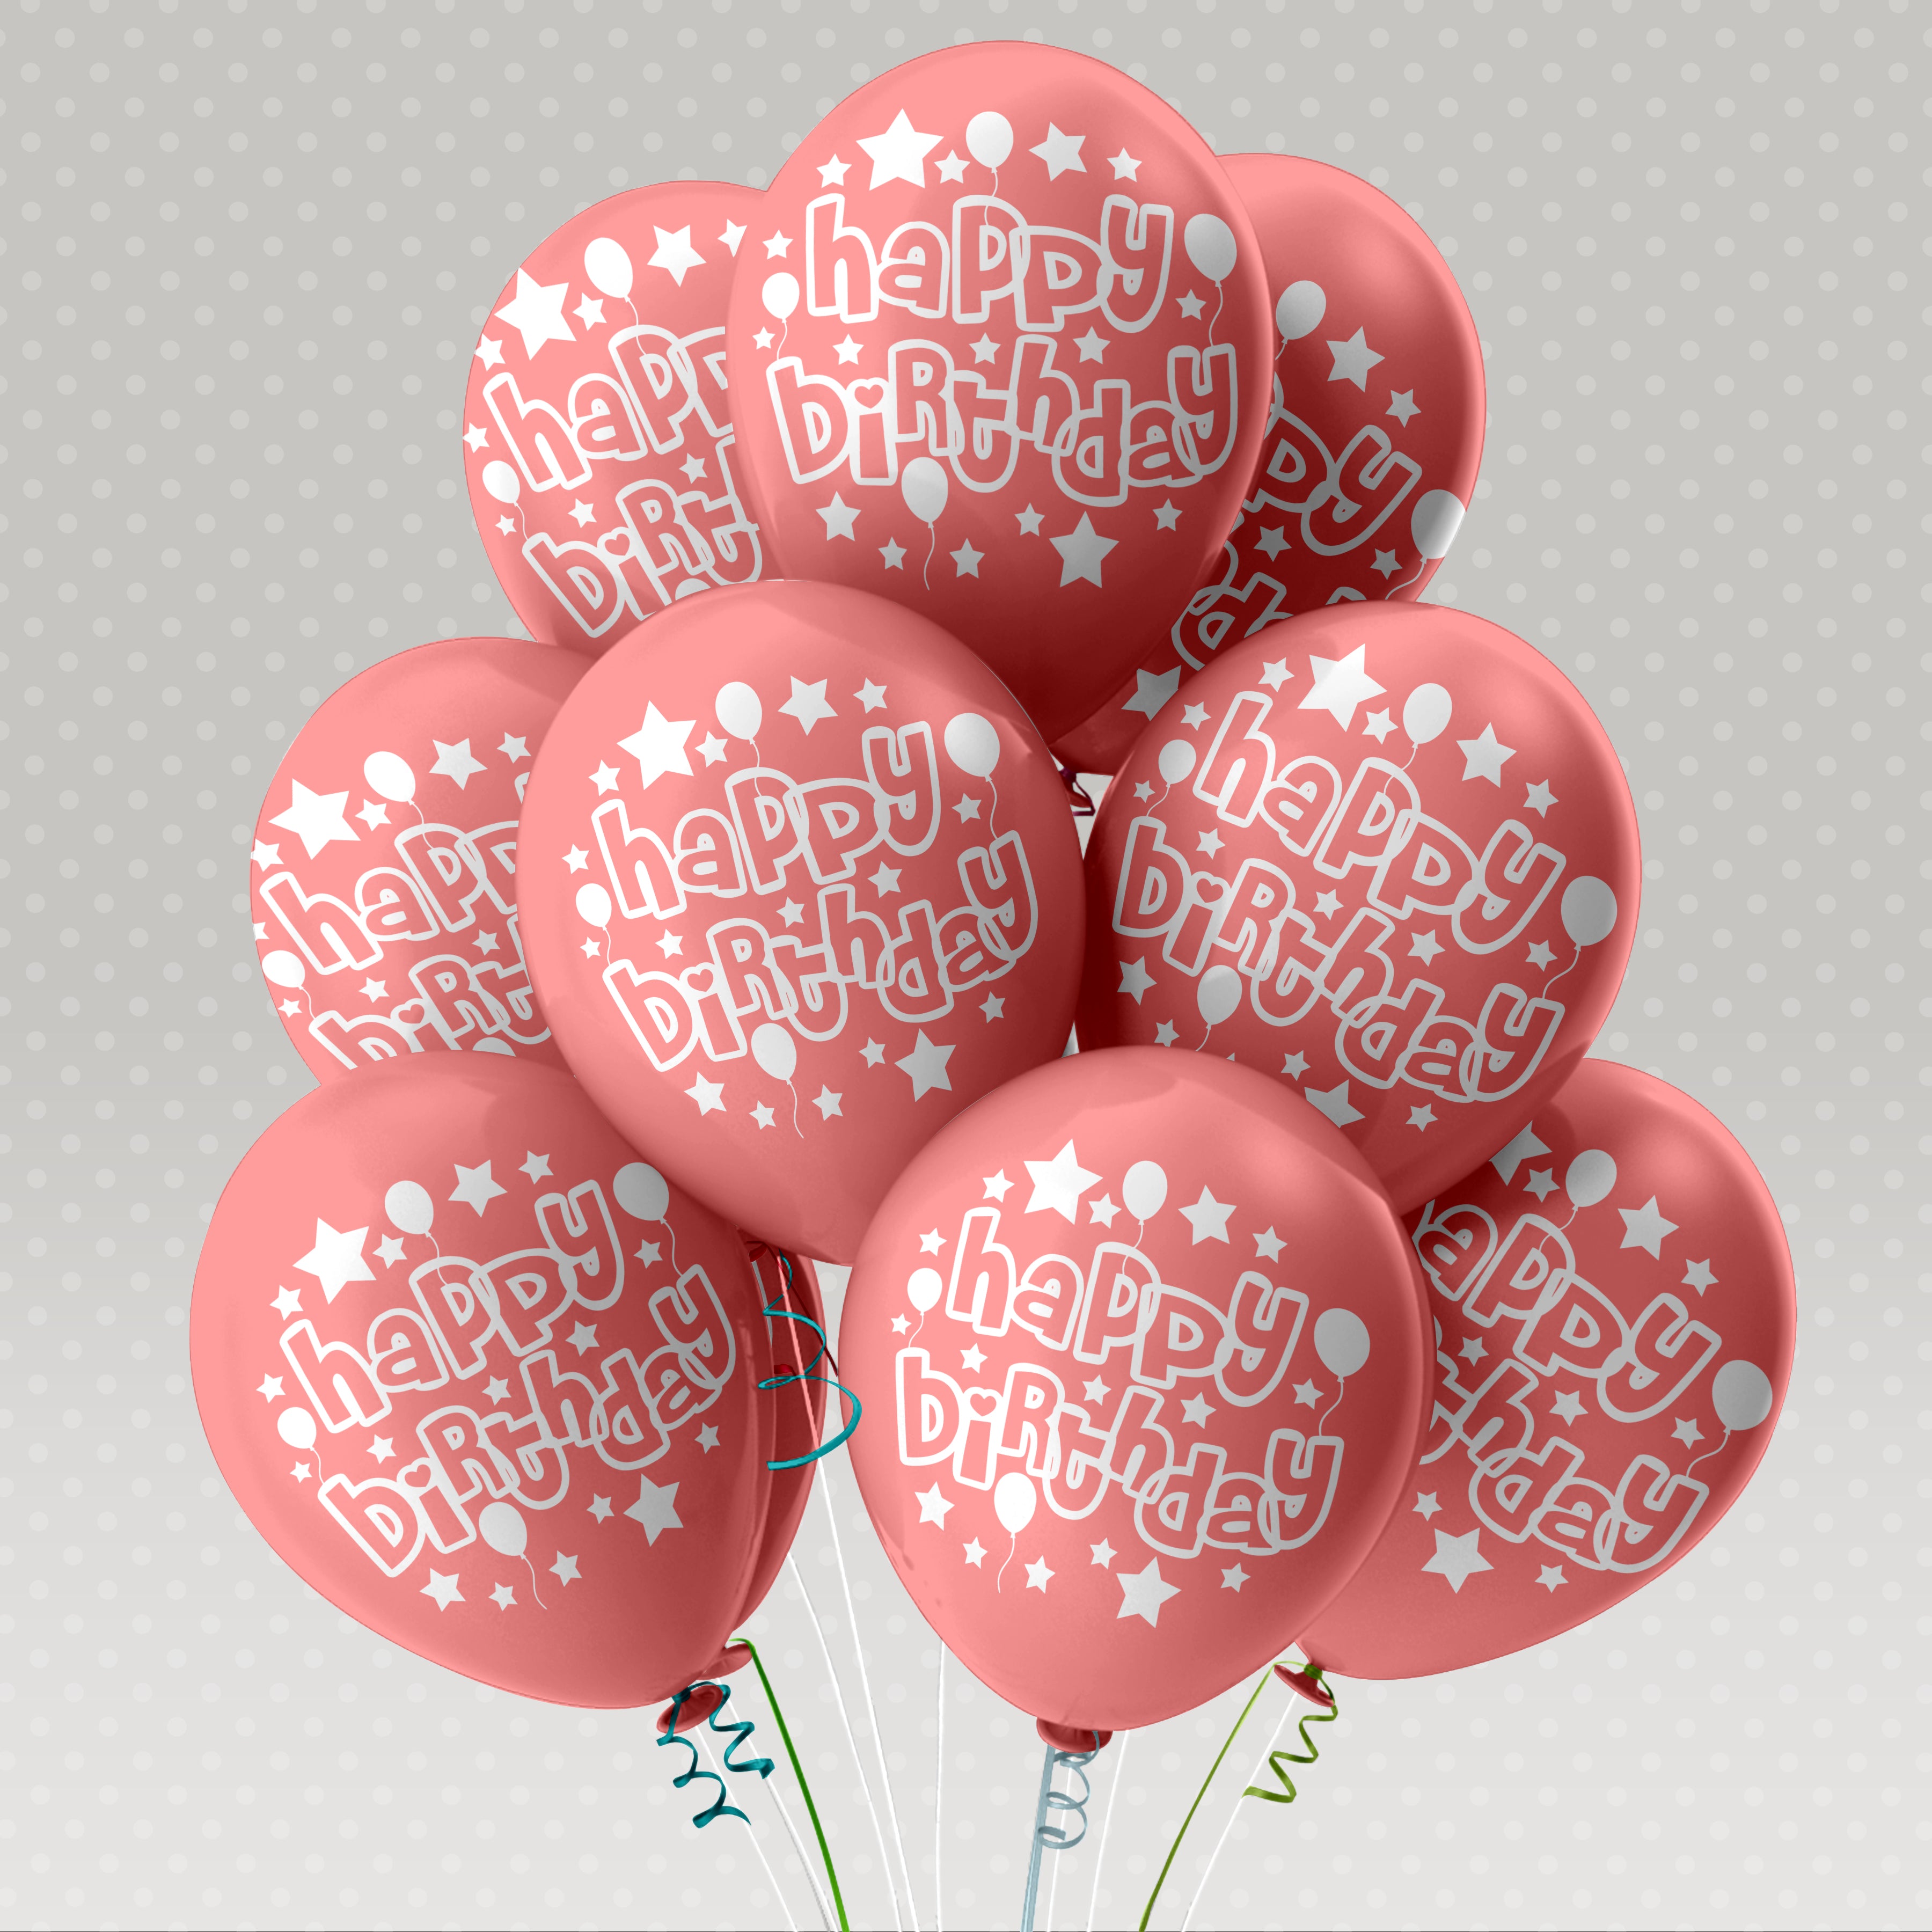 50 x Geburtstag Luftballon, Luftballons Druck, Luftballons mit Geburtstag Motiv.